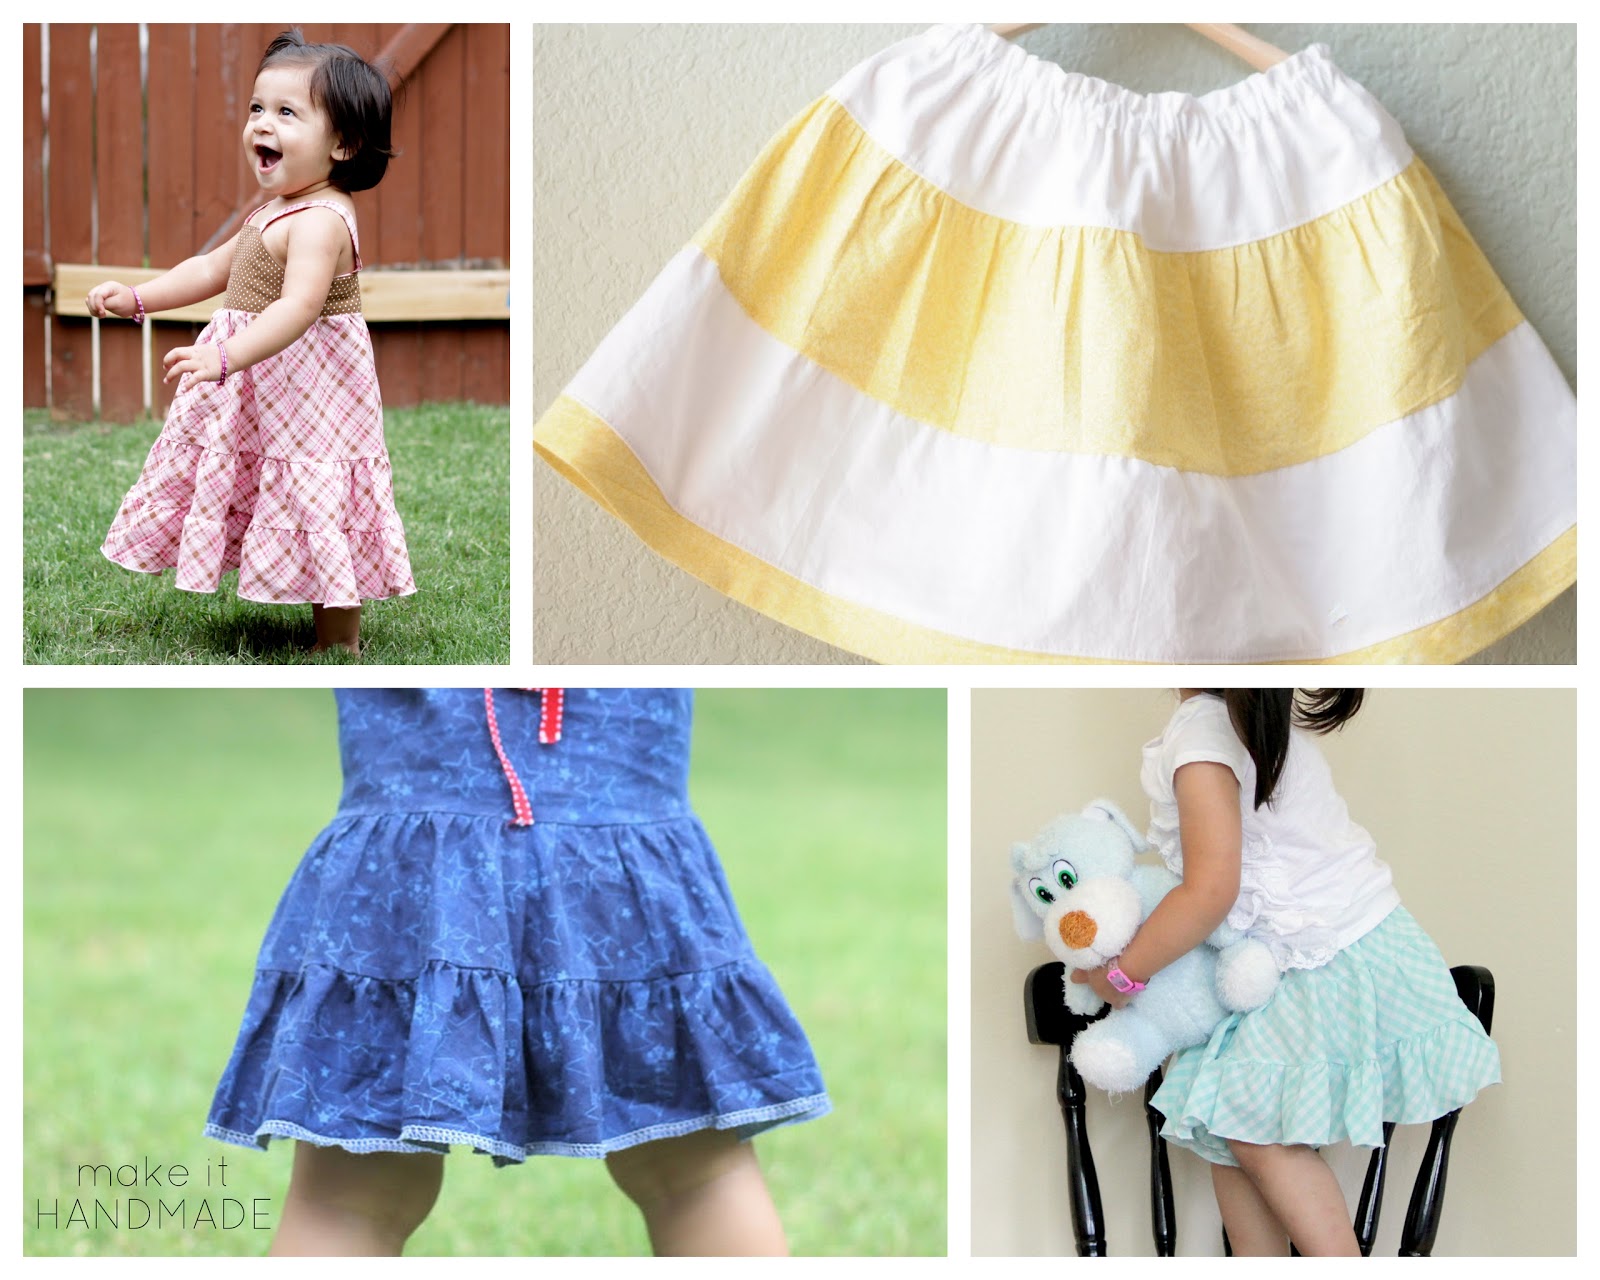 Make It Handmade: The Twirl Skirt